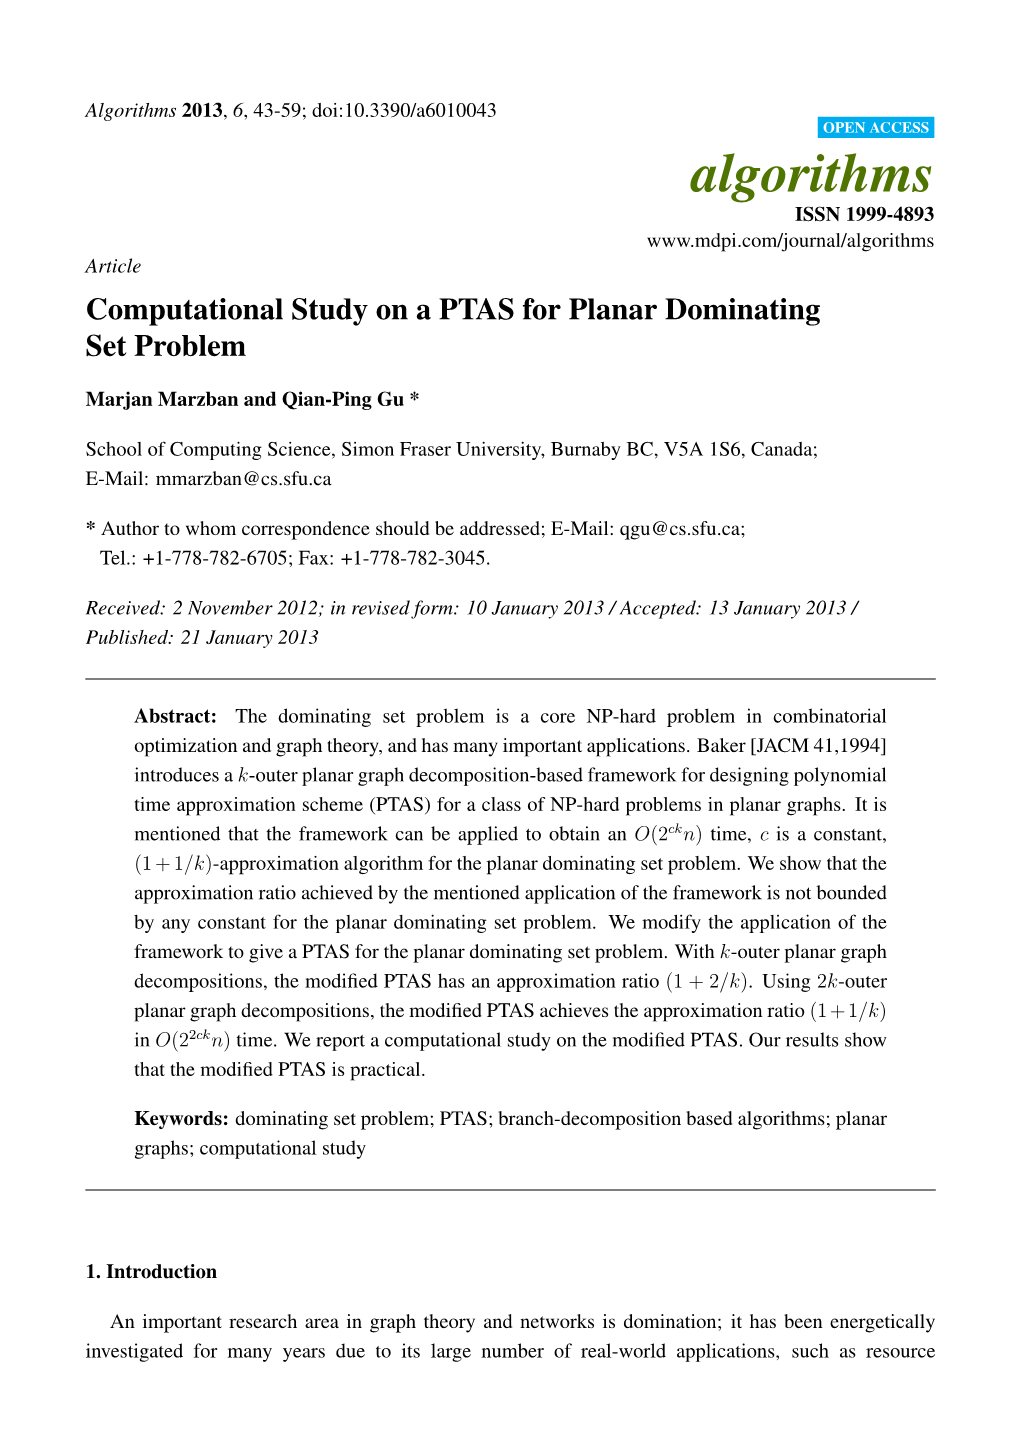 Computational Study on a PTAS for Planar Dominating Set Problem